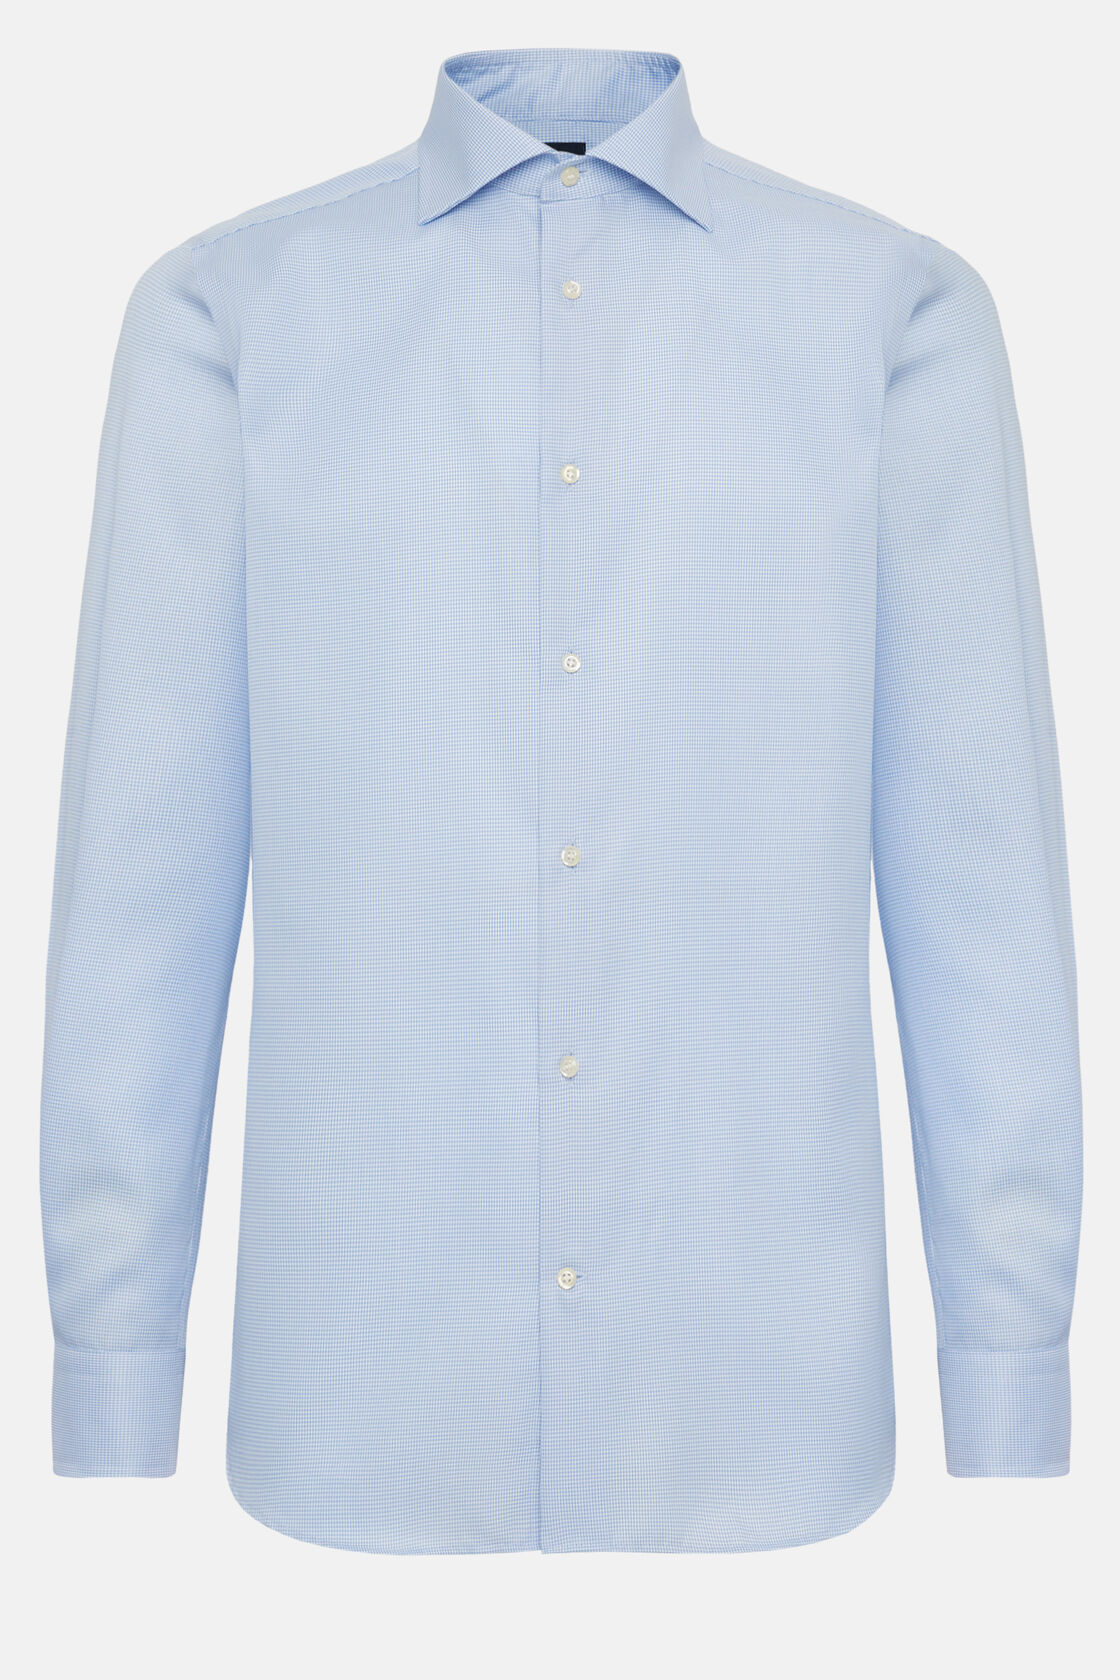 Sky Blue Houndstooth Cotton Shirt, Regular, Light Blue, hi-res